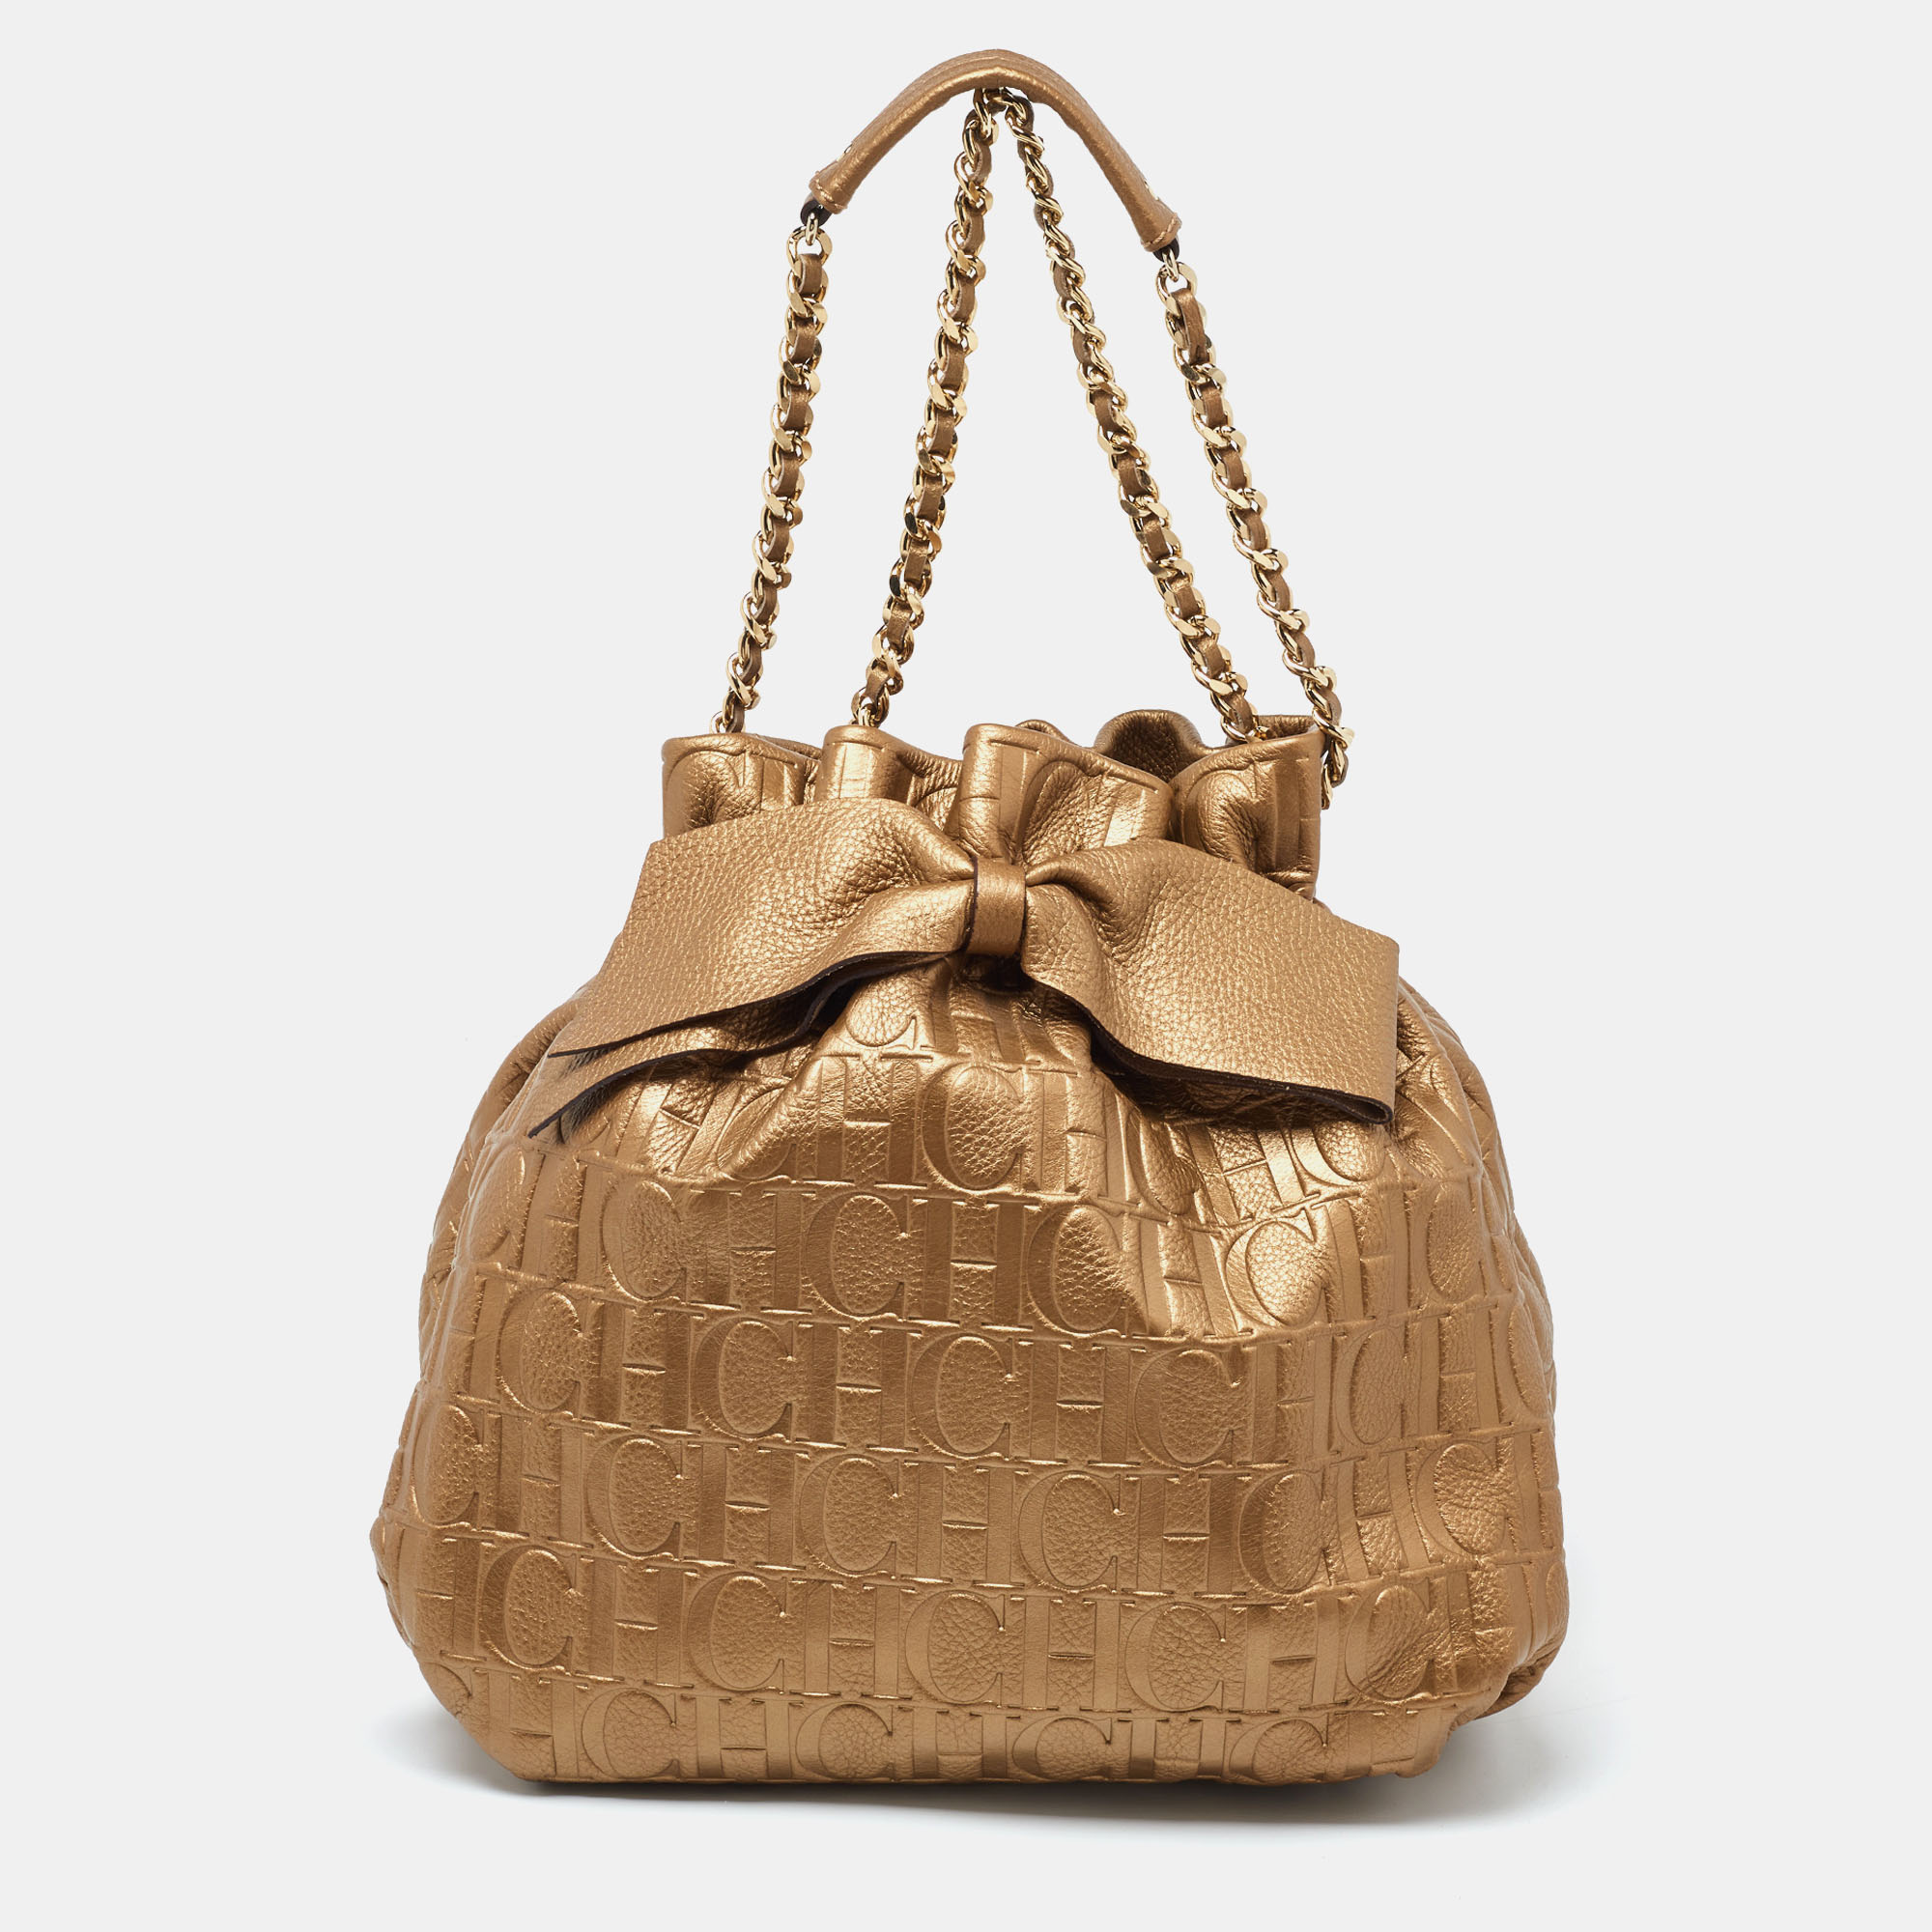 Ch carolina herrera gold embossed leather bow bucket bag